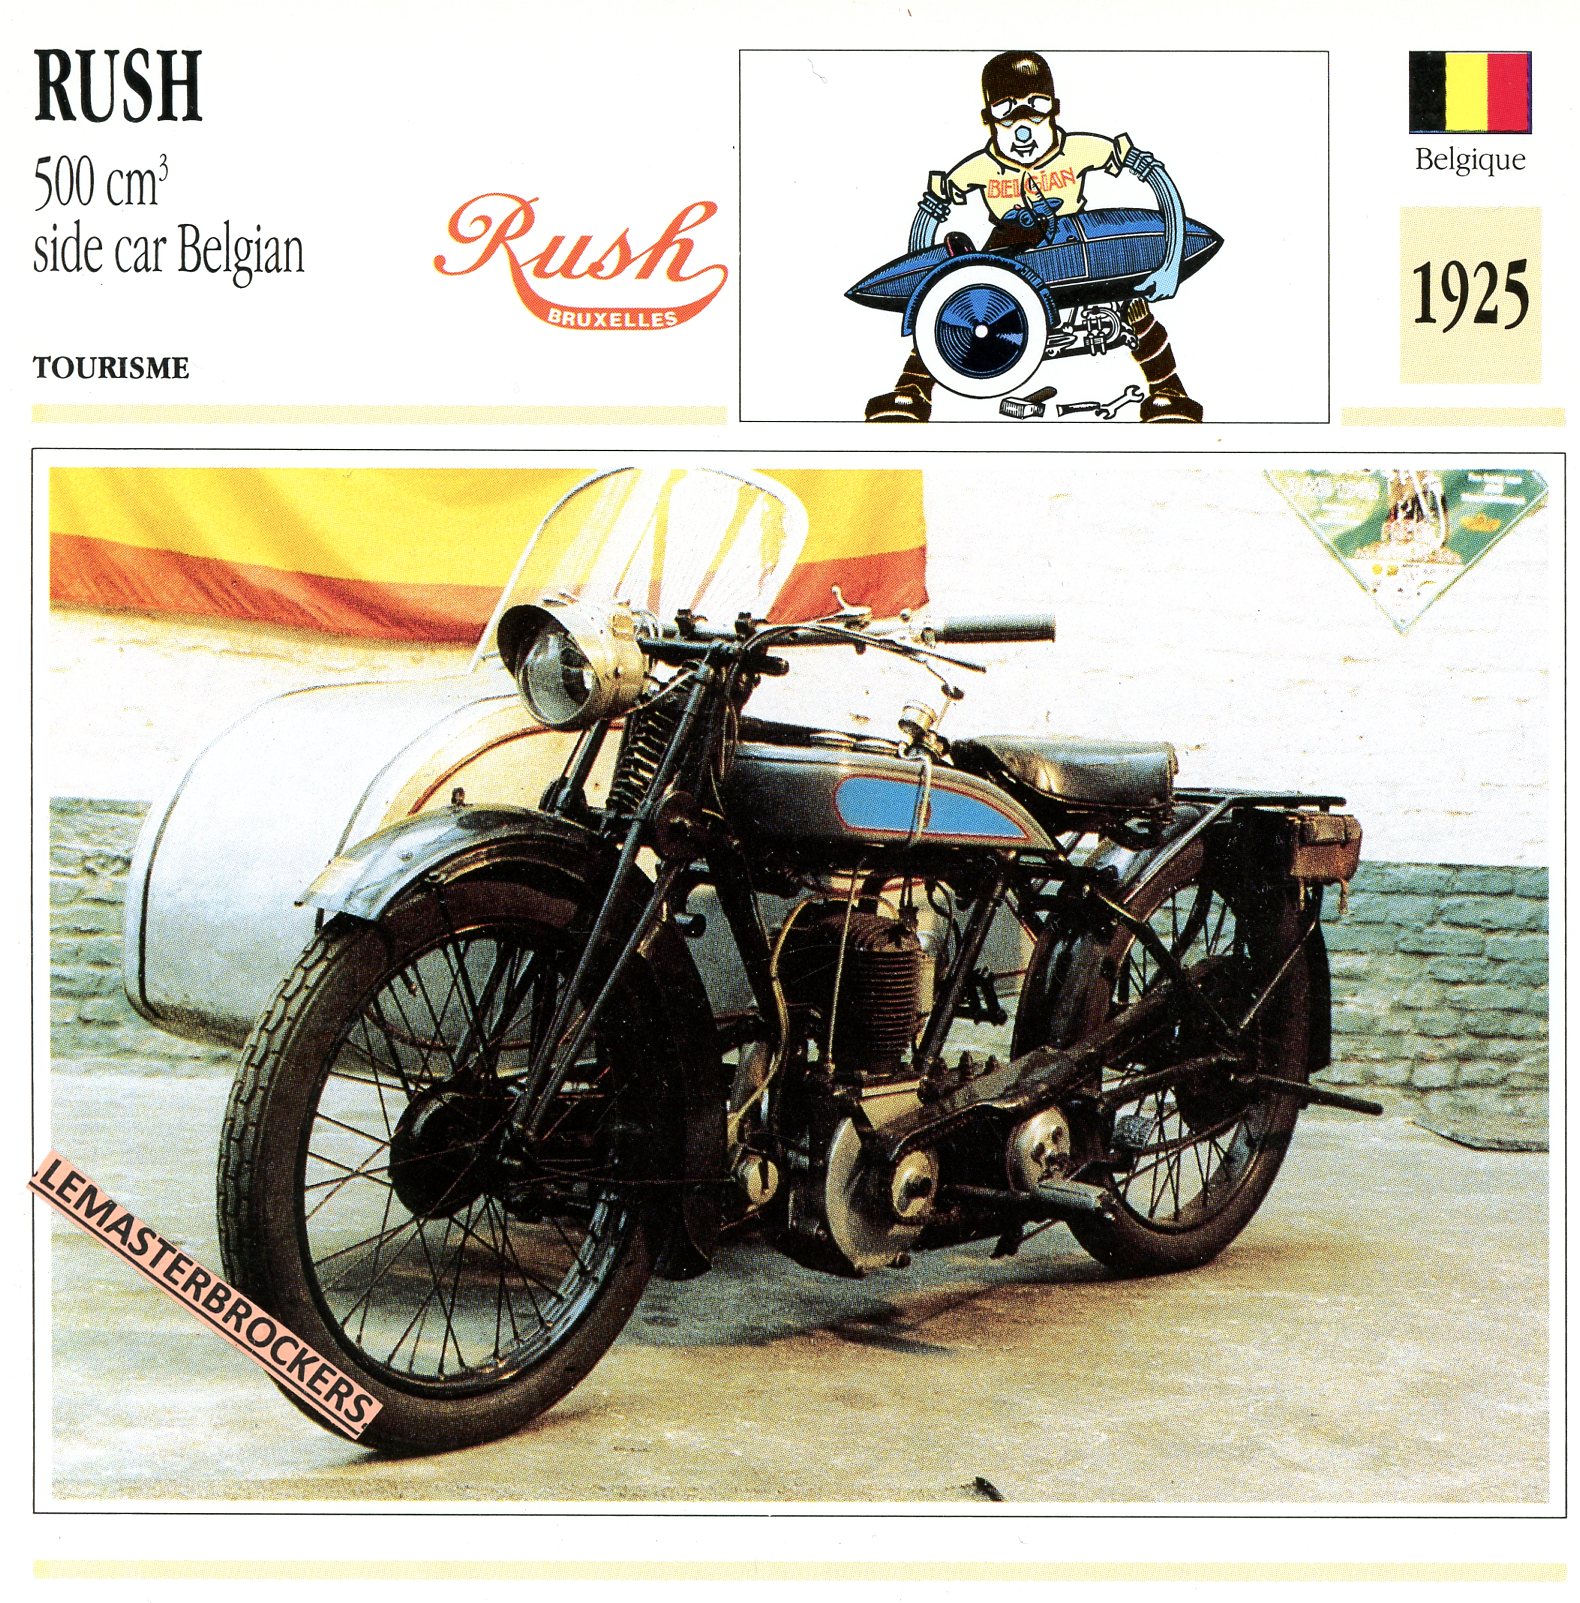 RUSH-500-SIDE-CAR-BELGIAN-1925-FICHE-MOTO-LEMASTERBROCKERS-CARD-MOTORCYCLE